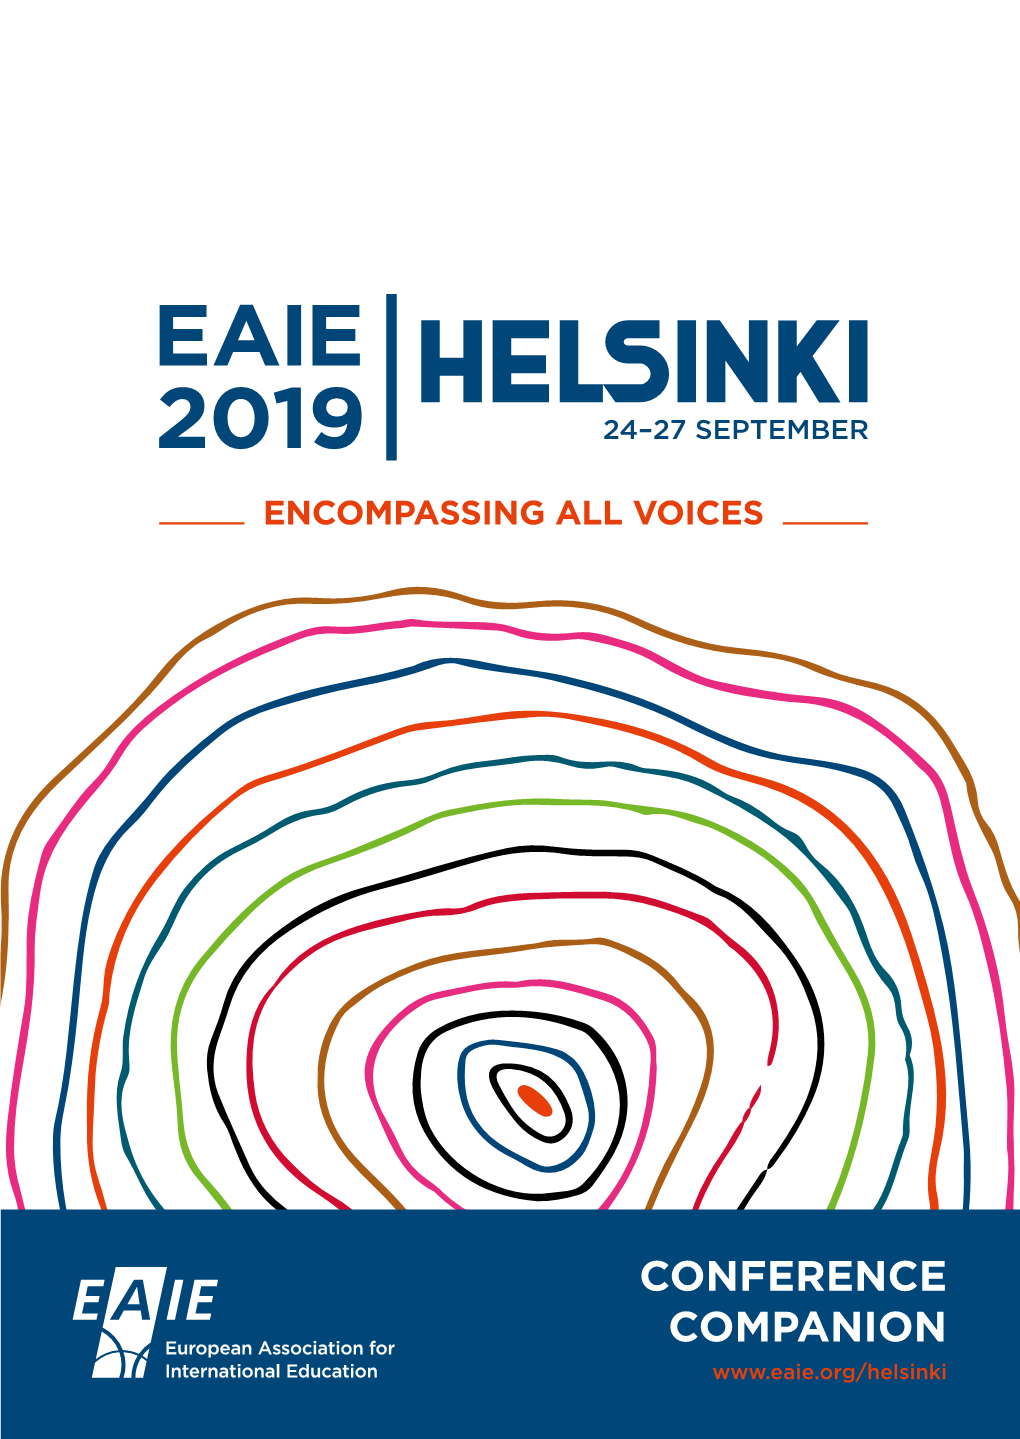 EAIE 2019 Conference Companion.Pdf